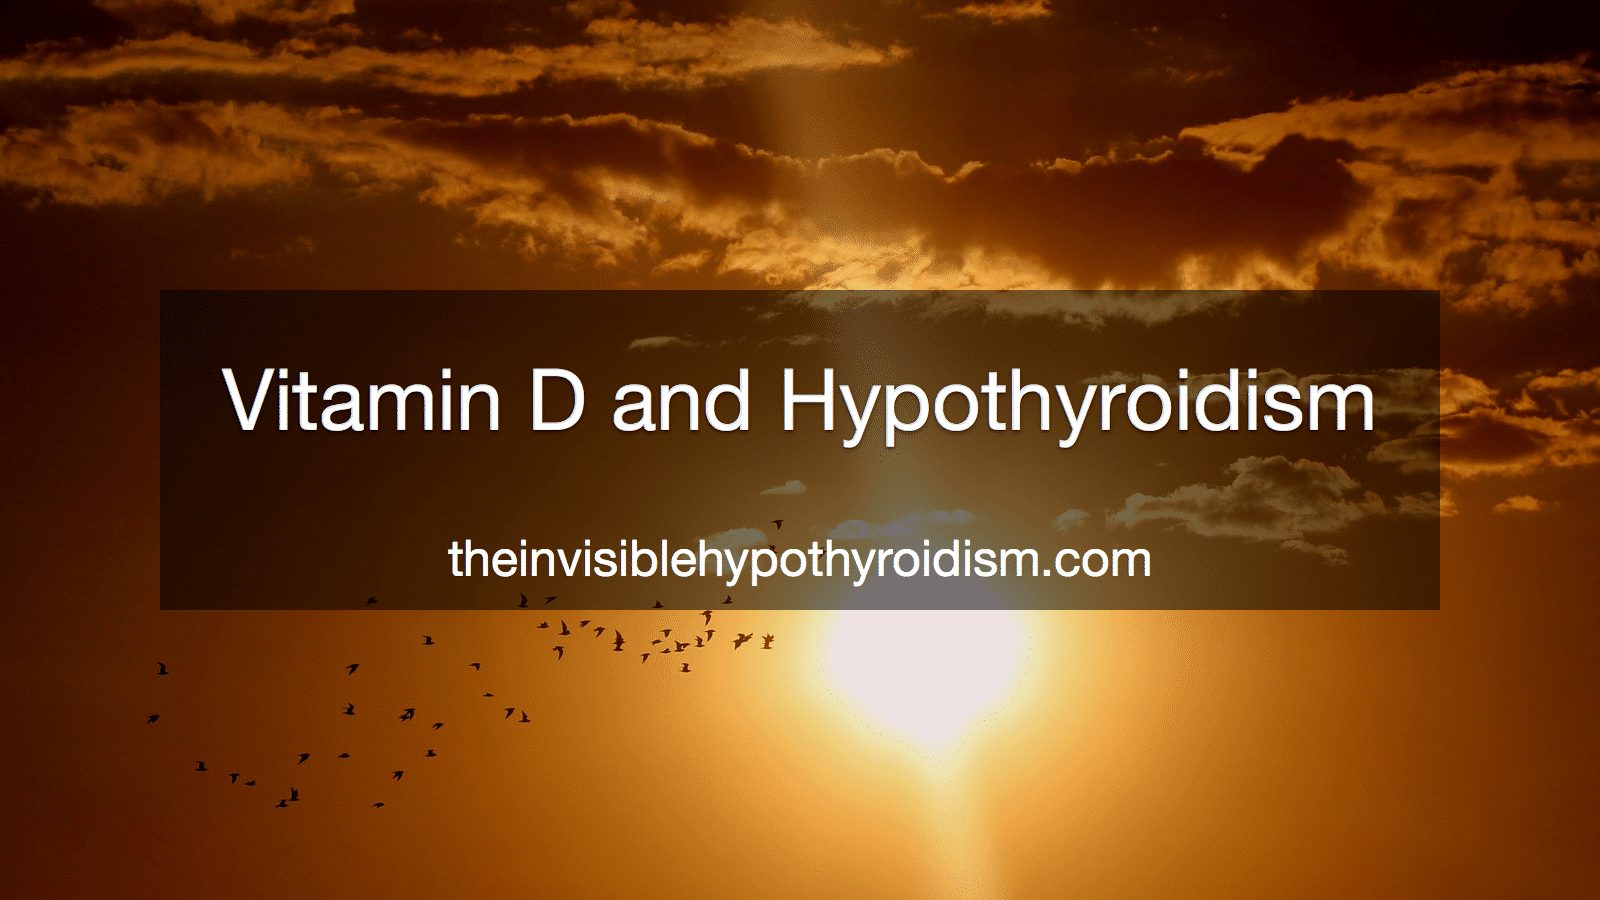 Vitamin D and Hypothyroidism